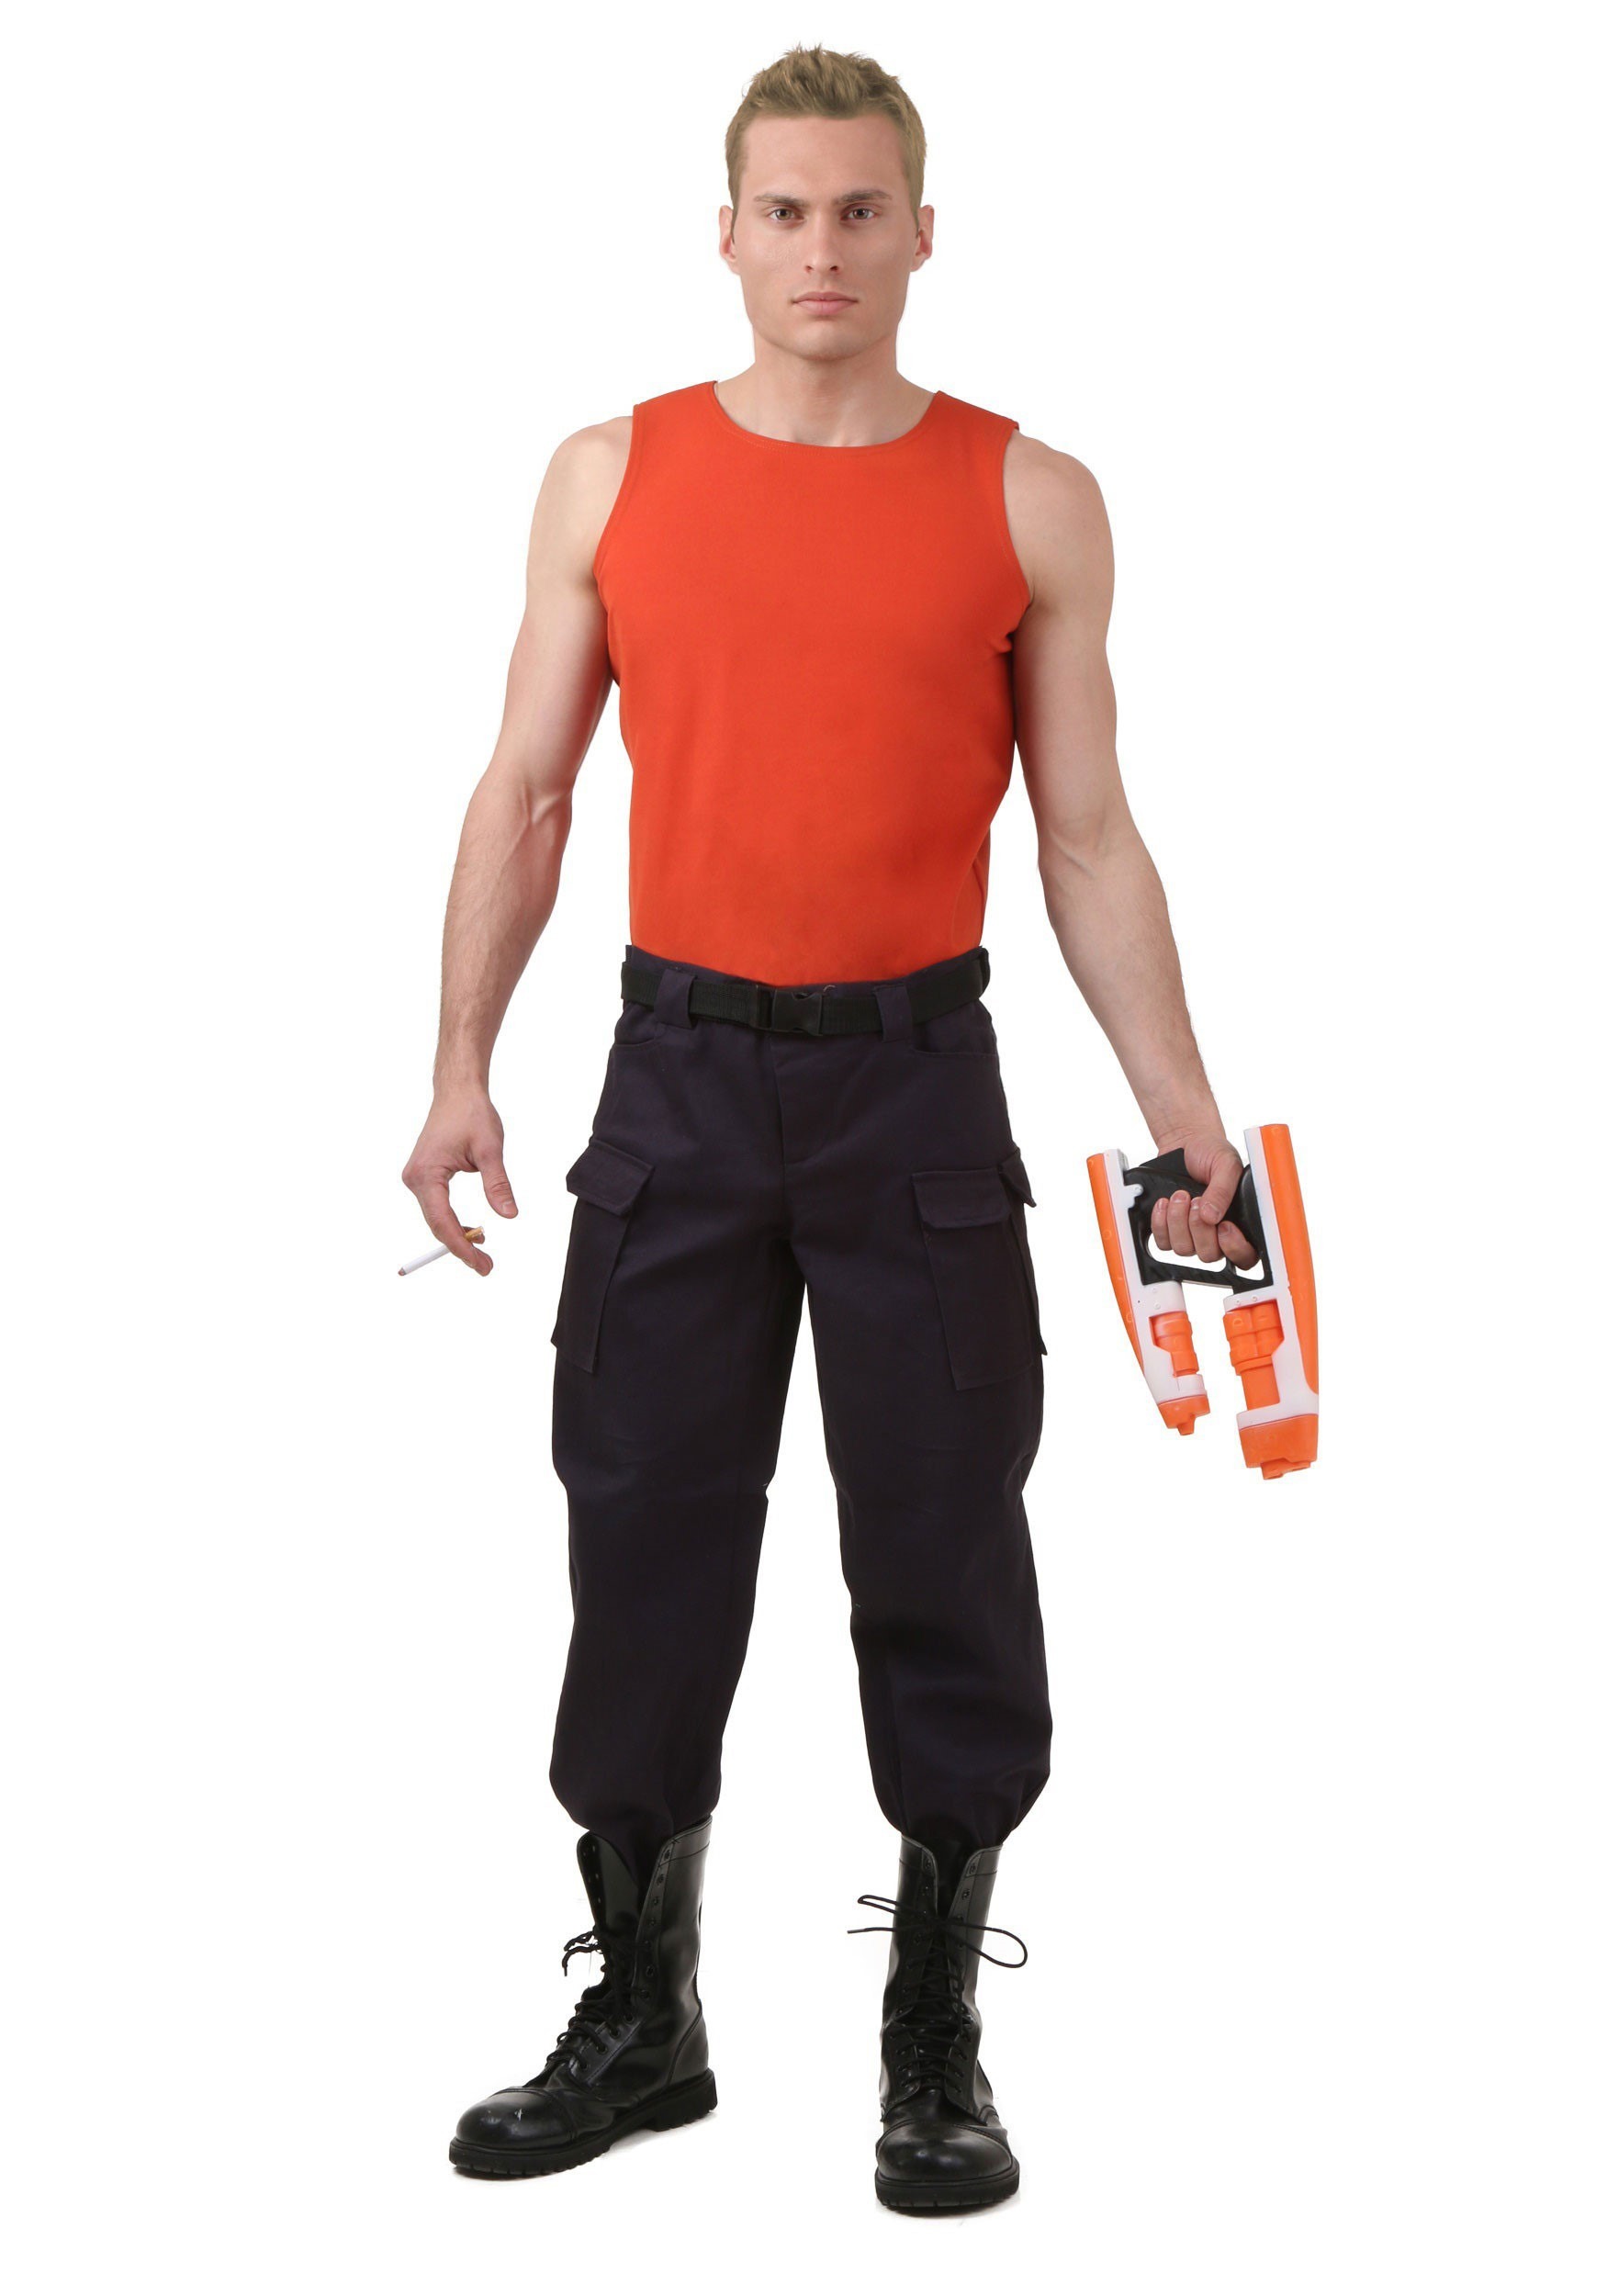 Image of Fifth Element Korben Dallas Costume ID FUN2360-L